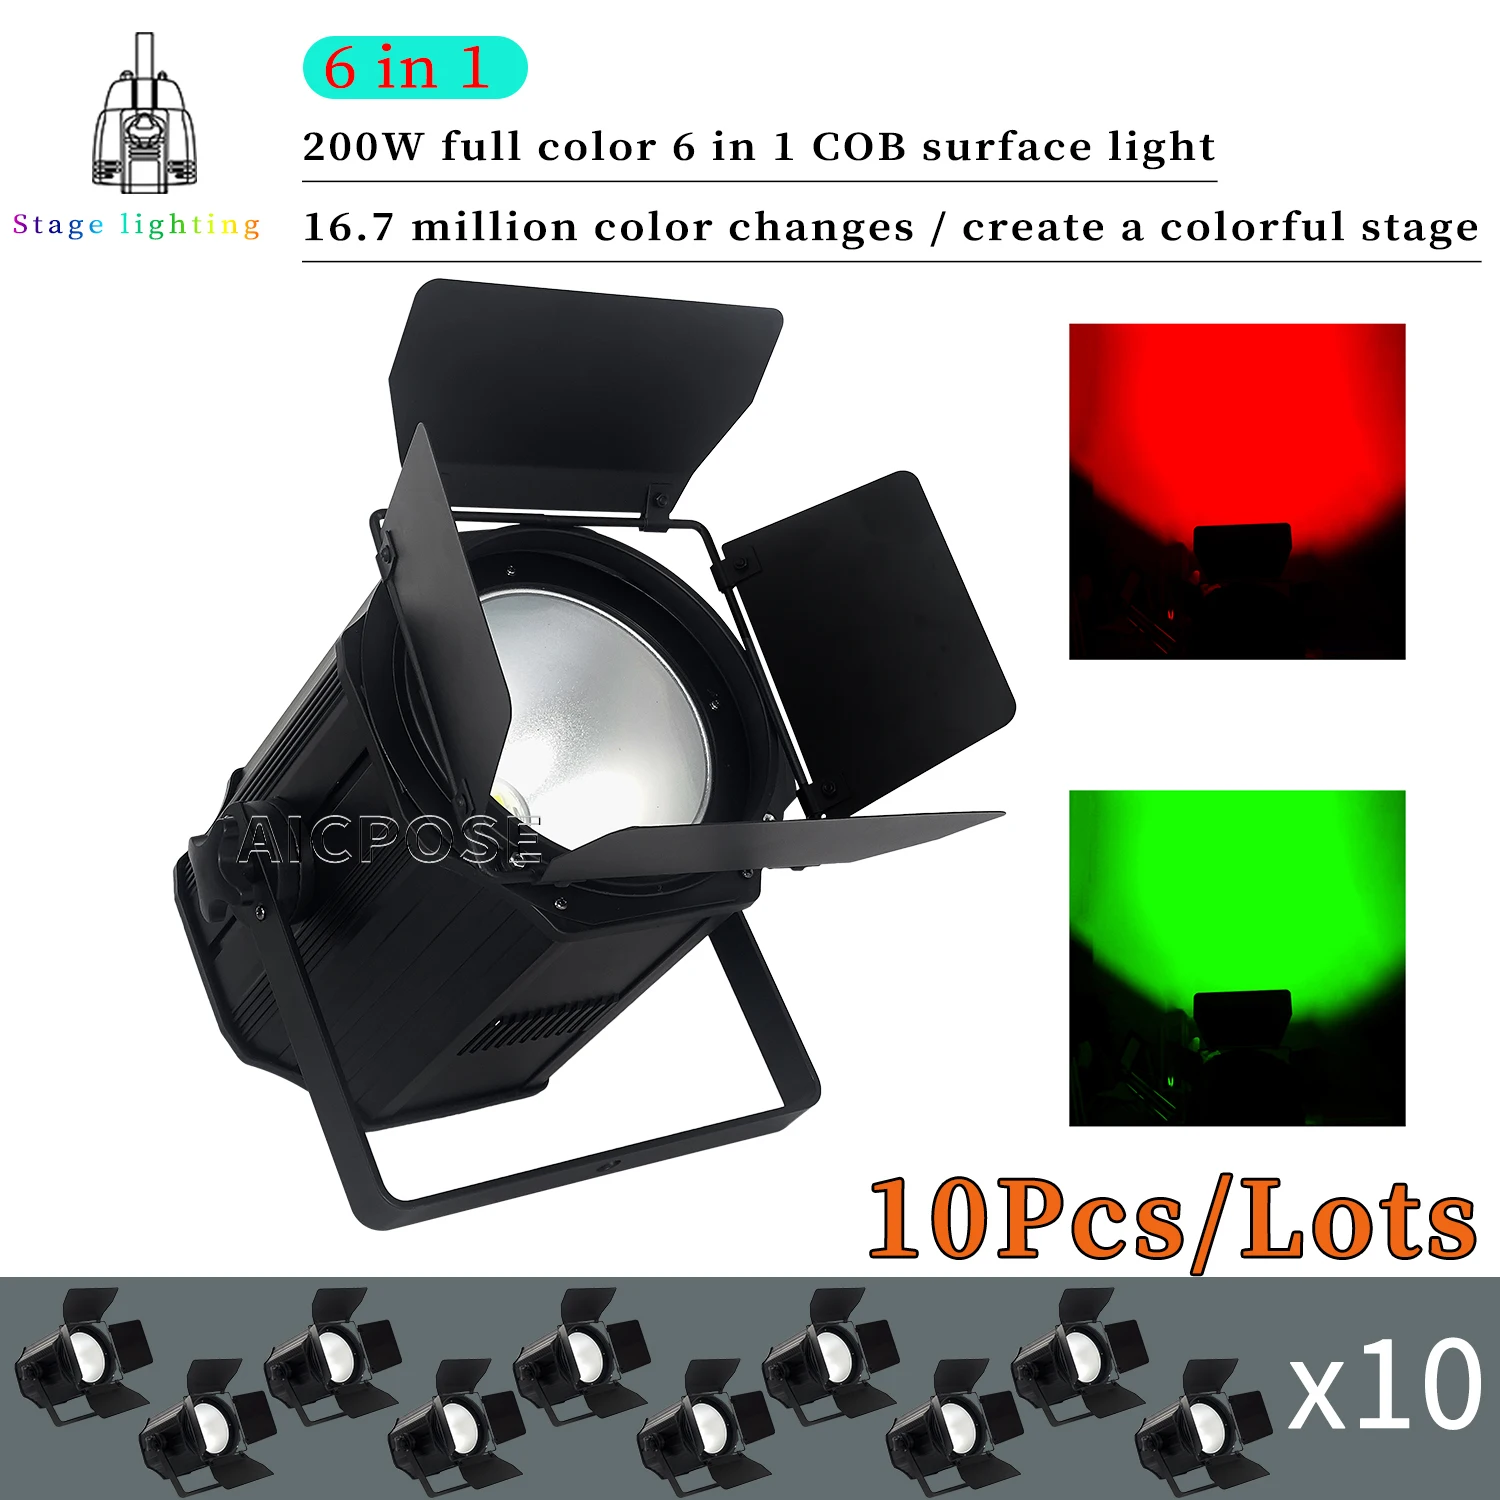 

10Pcs/Lots 200W COB Audience Light RGBW 4 in 1/RGBWA UV 6 in 1 LED Stage Light DMX Control DJ Disco Equipment Lighting